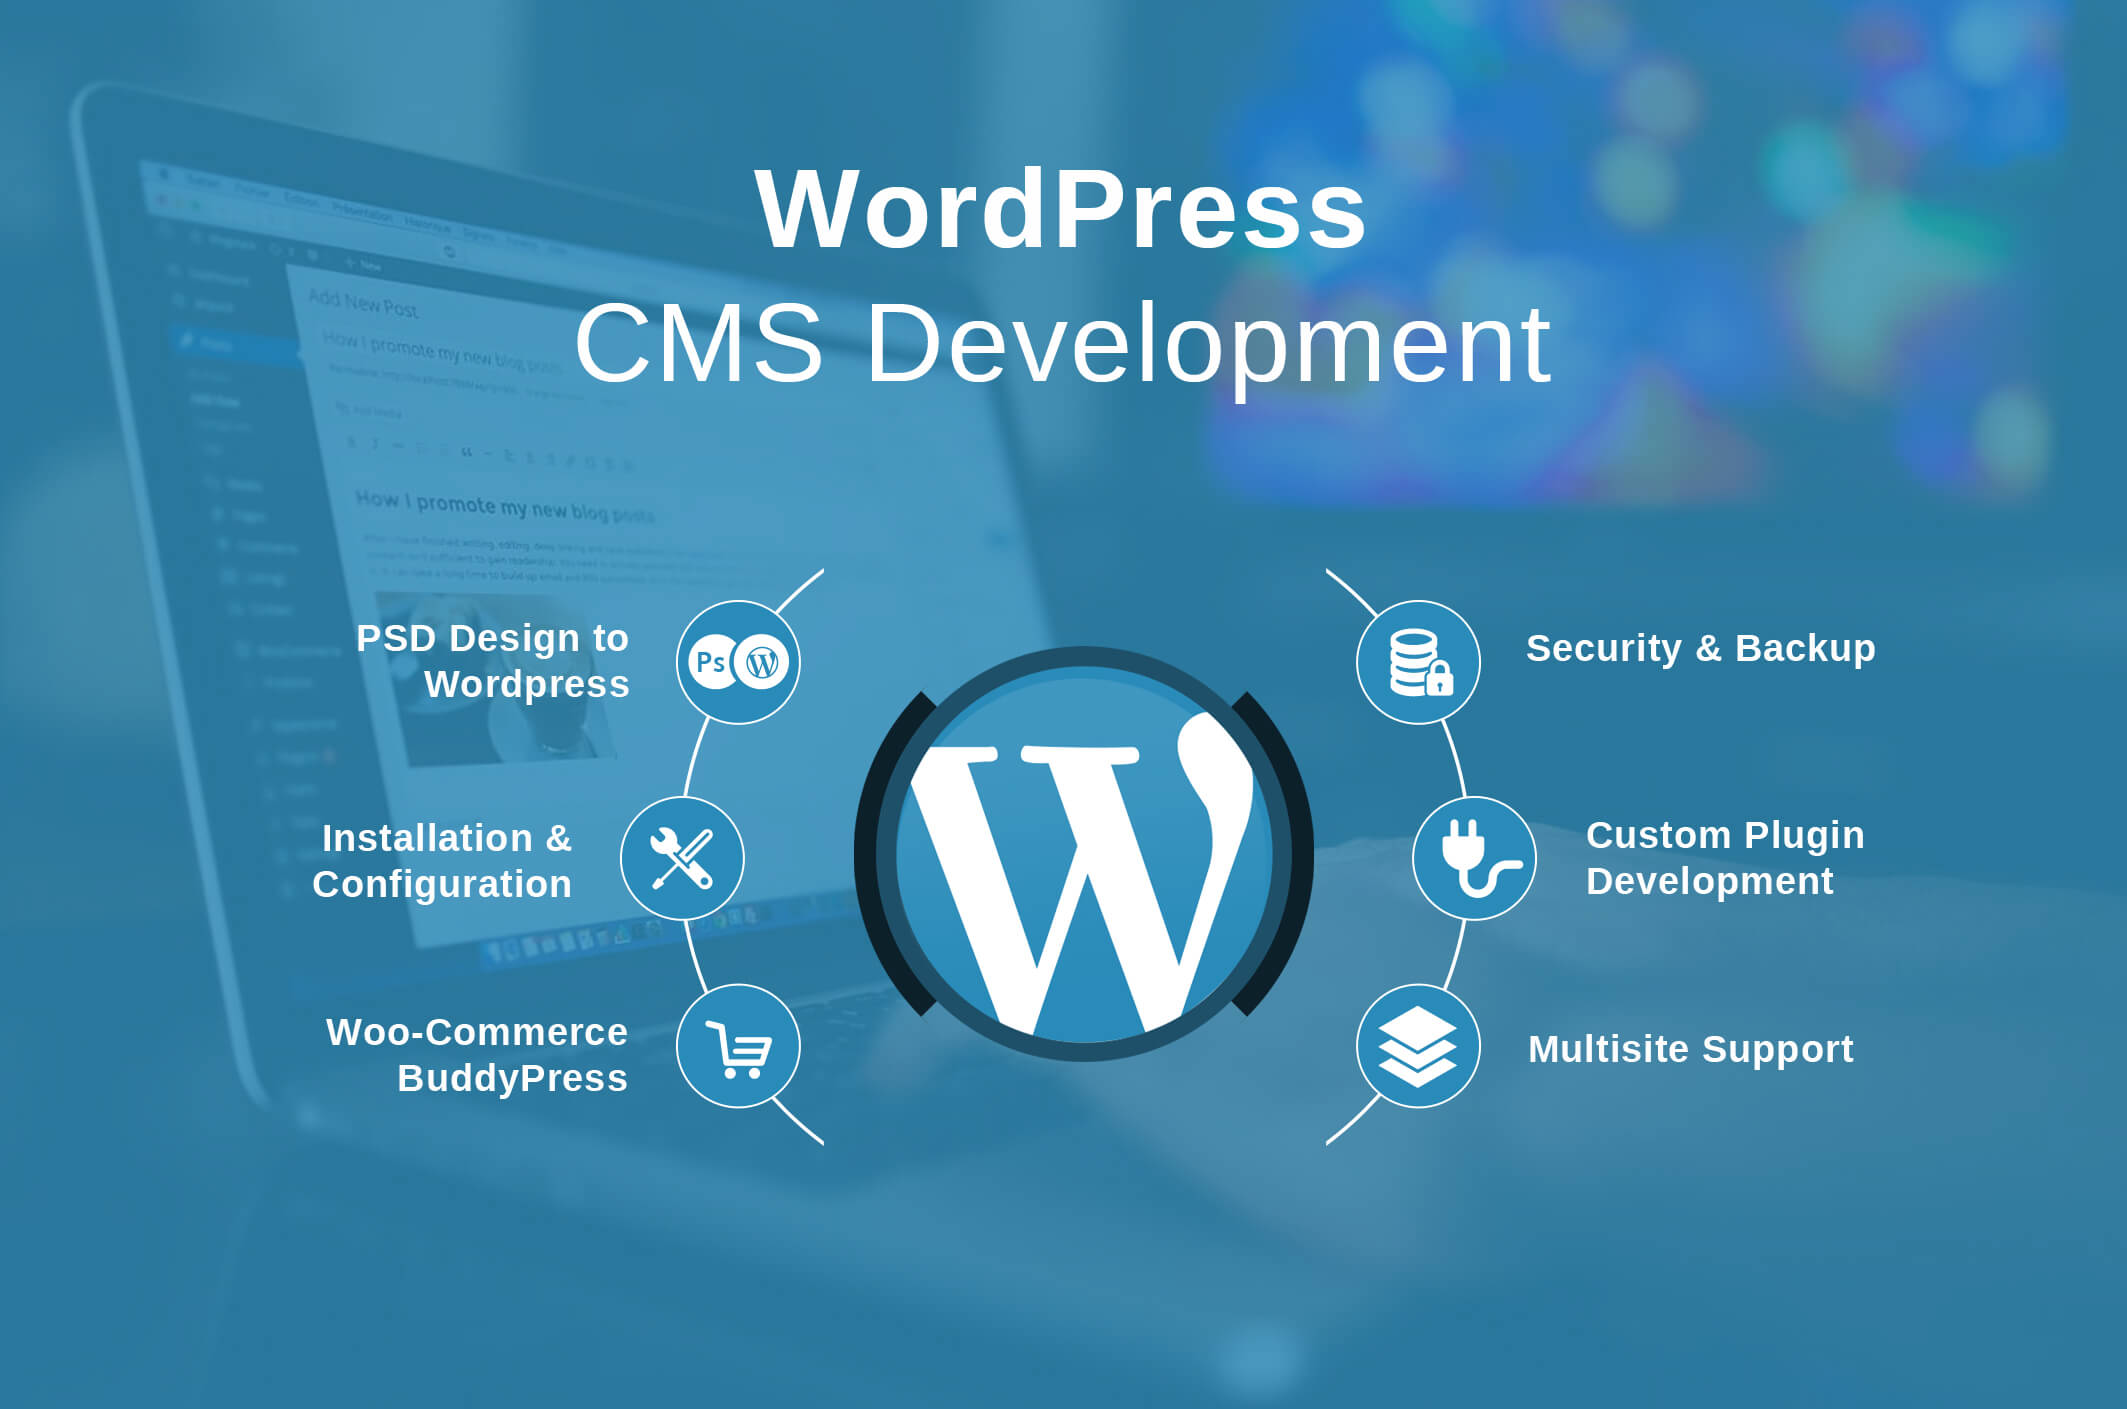 WordPress Business Website